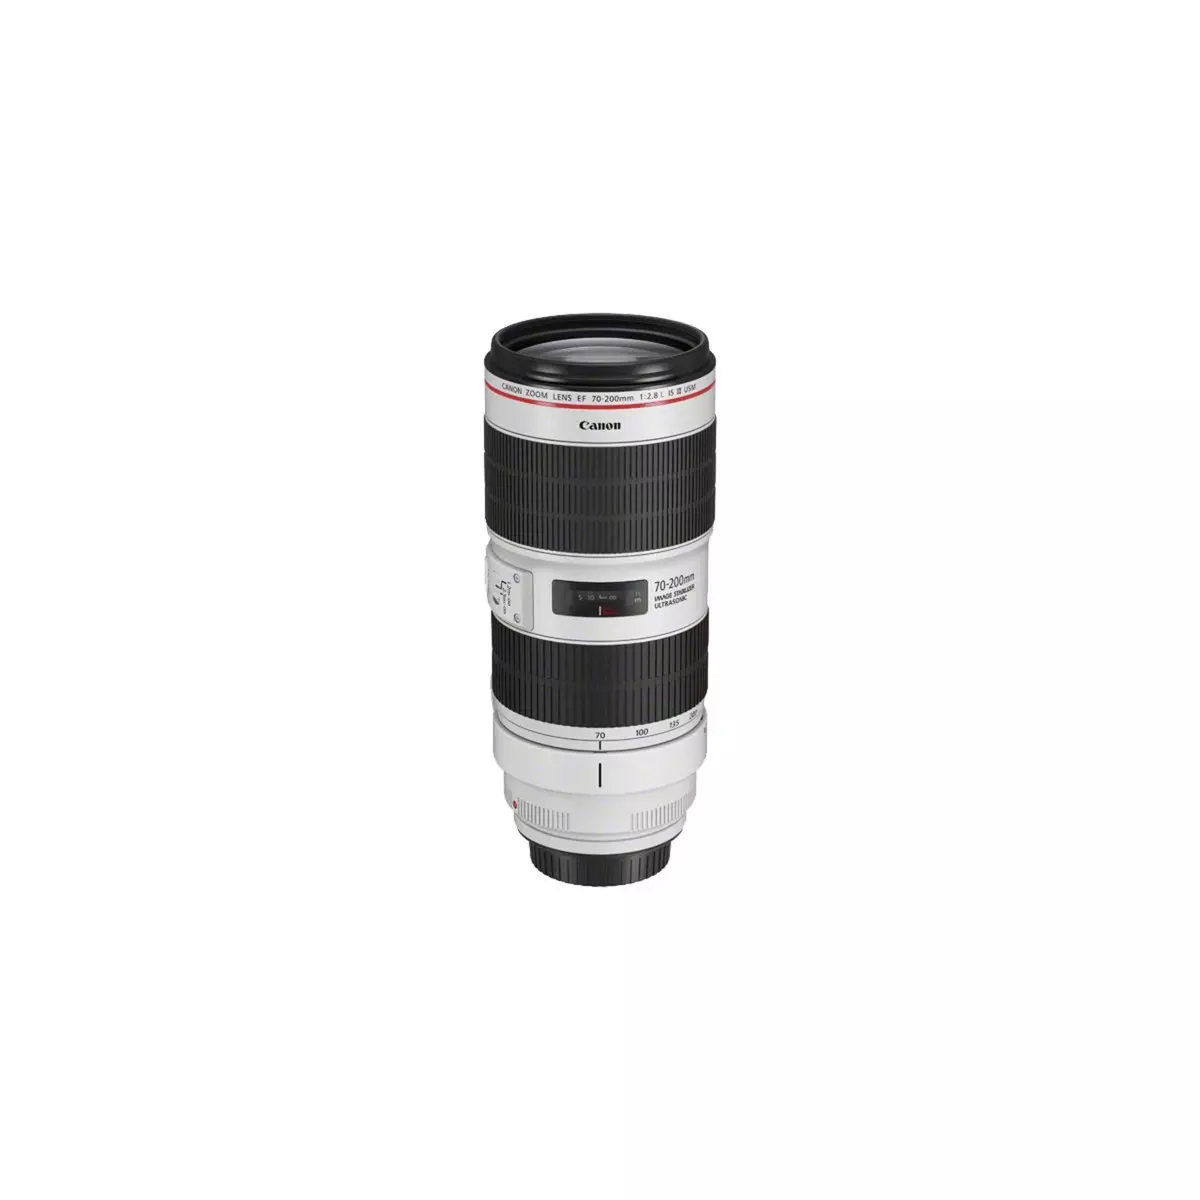 Canon Objectif pour Reflex Plein Format EF 70-200mm f/2.8 L IS III USM